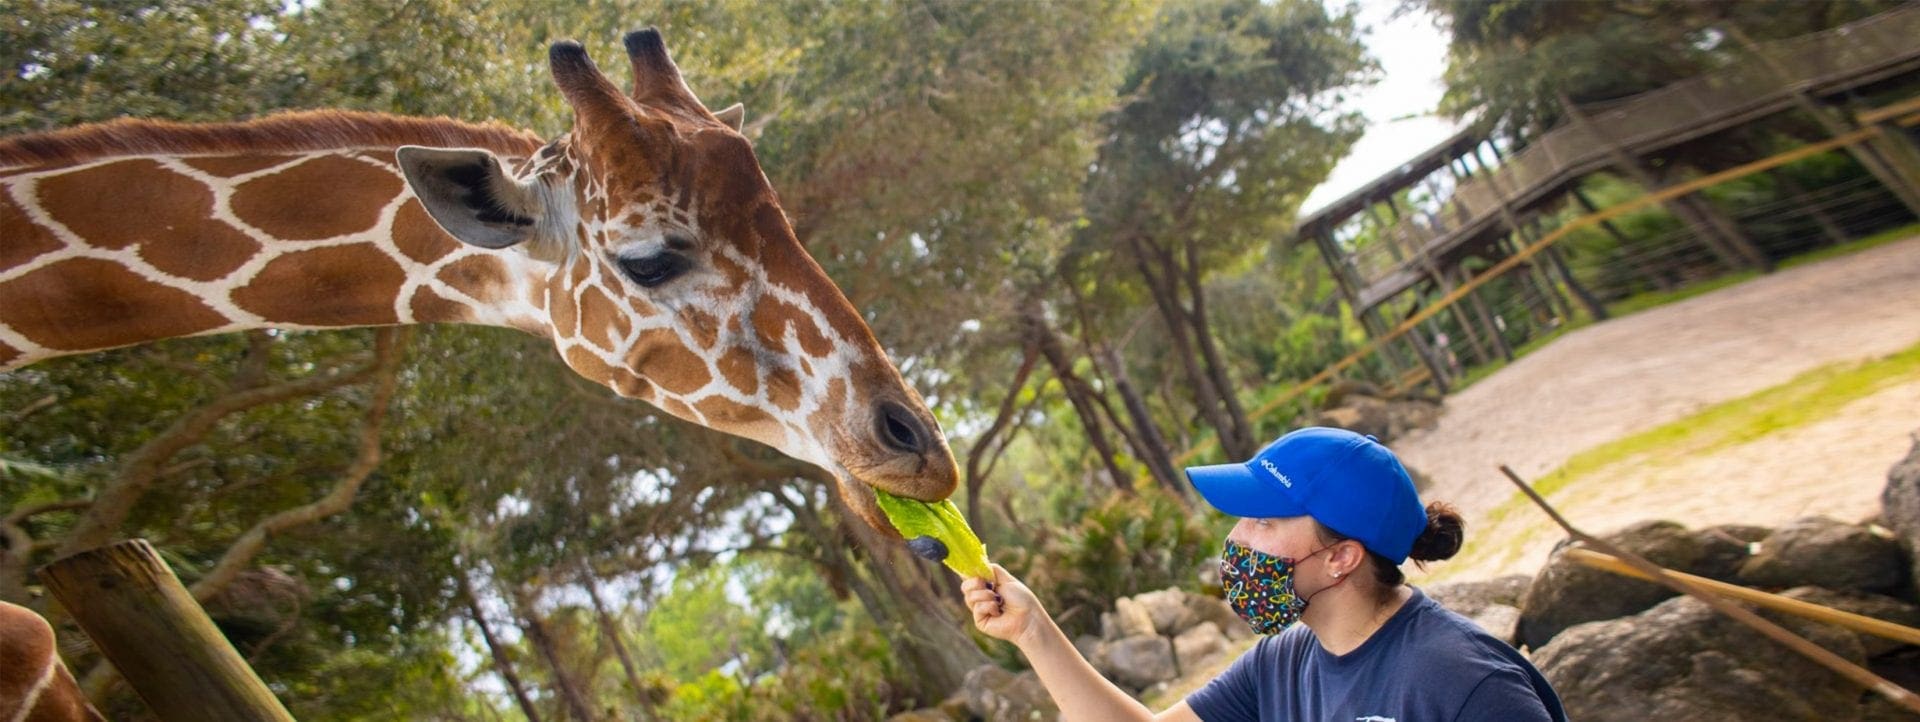 A female zookeeper feeds a giraffe lettuce.